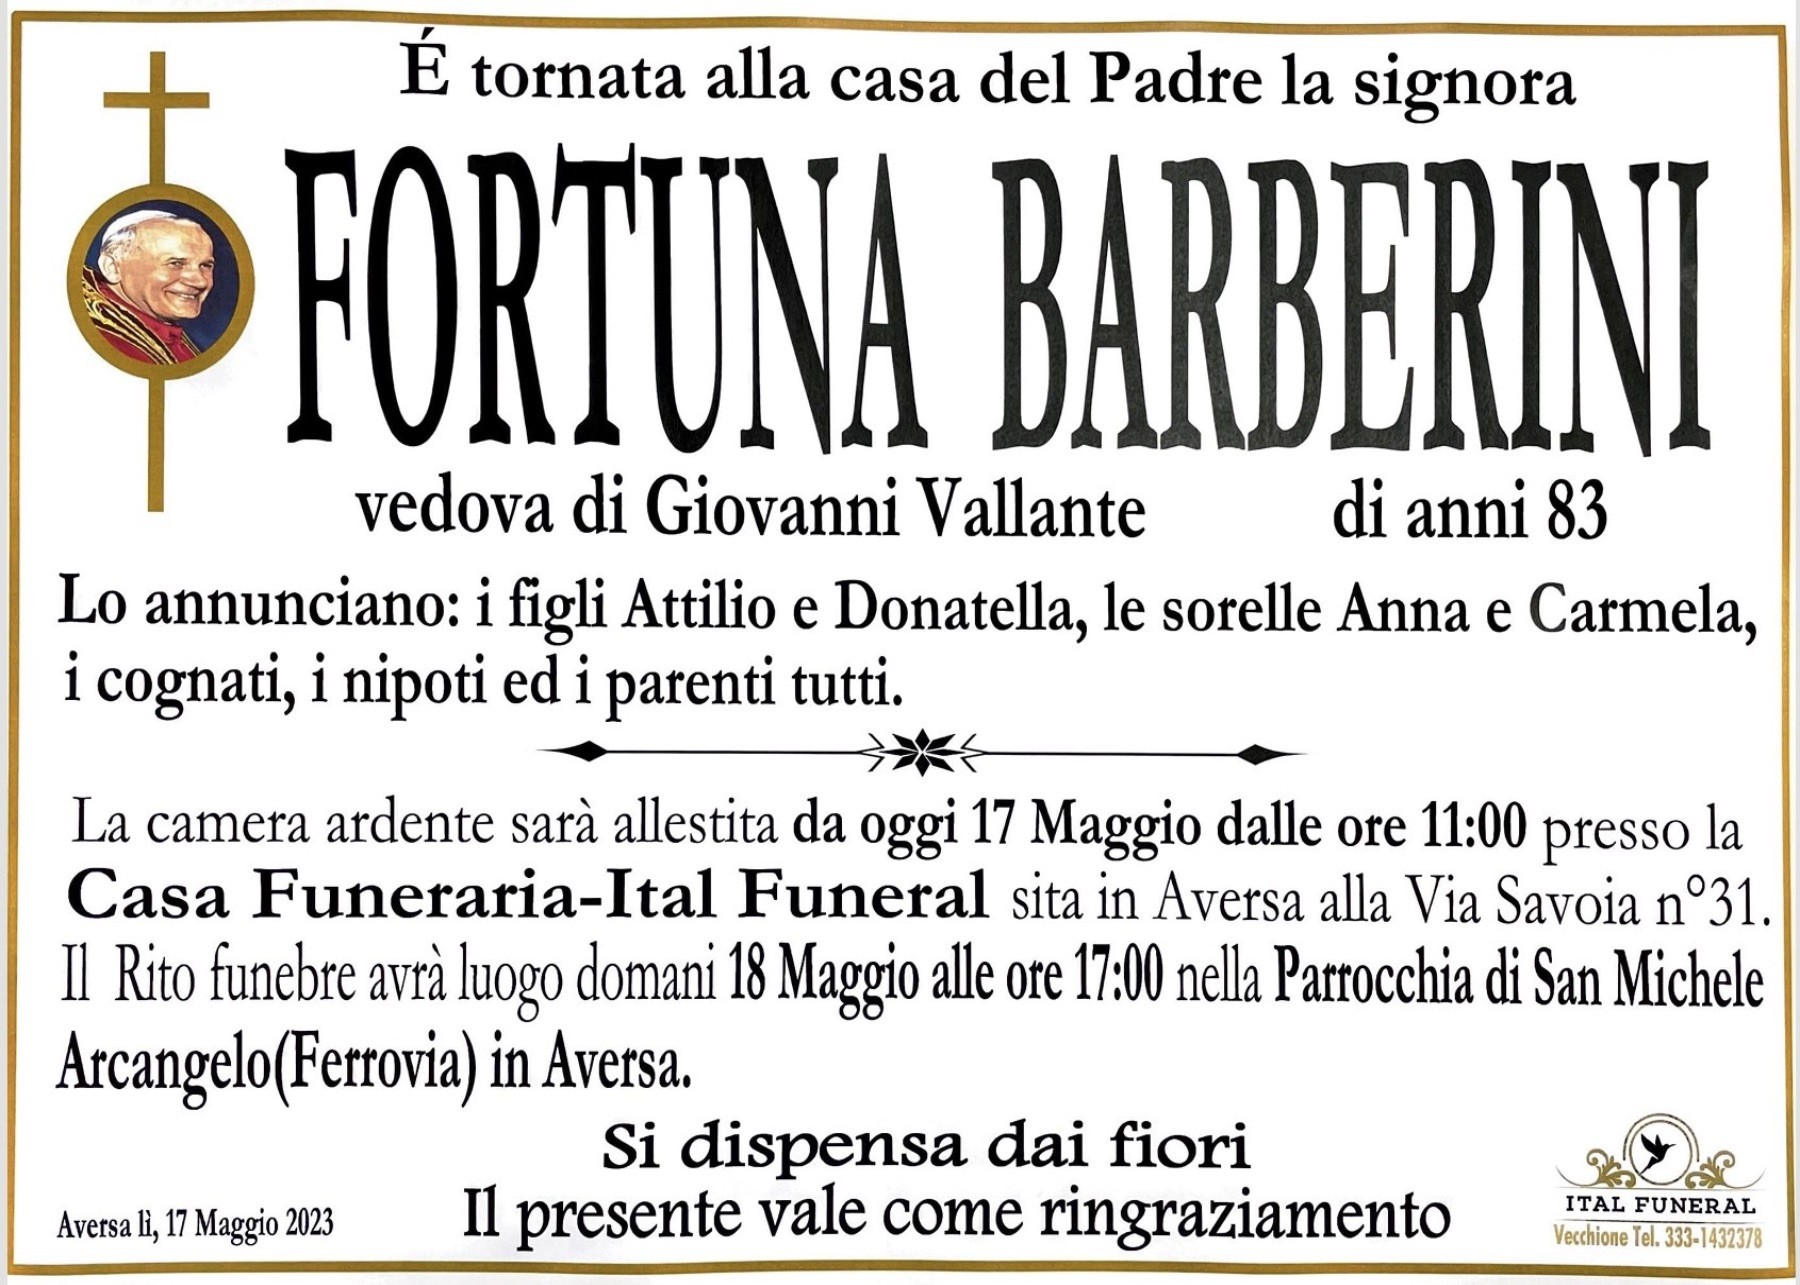 Fortuna Barberini